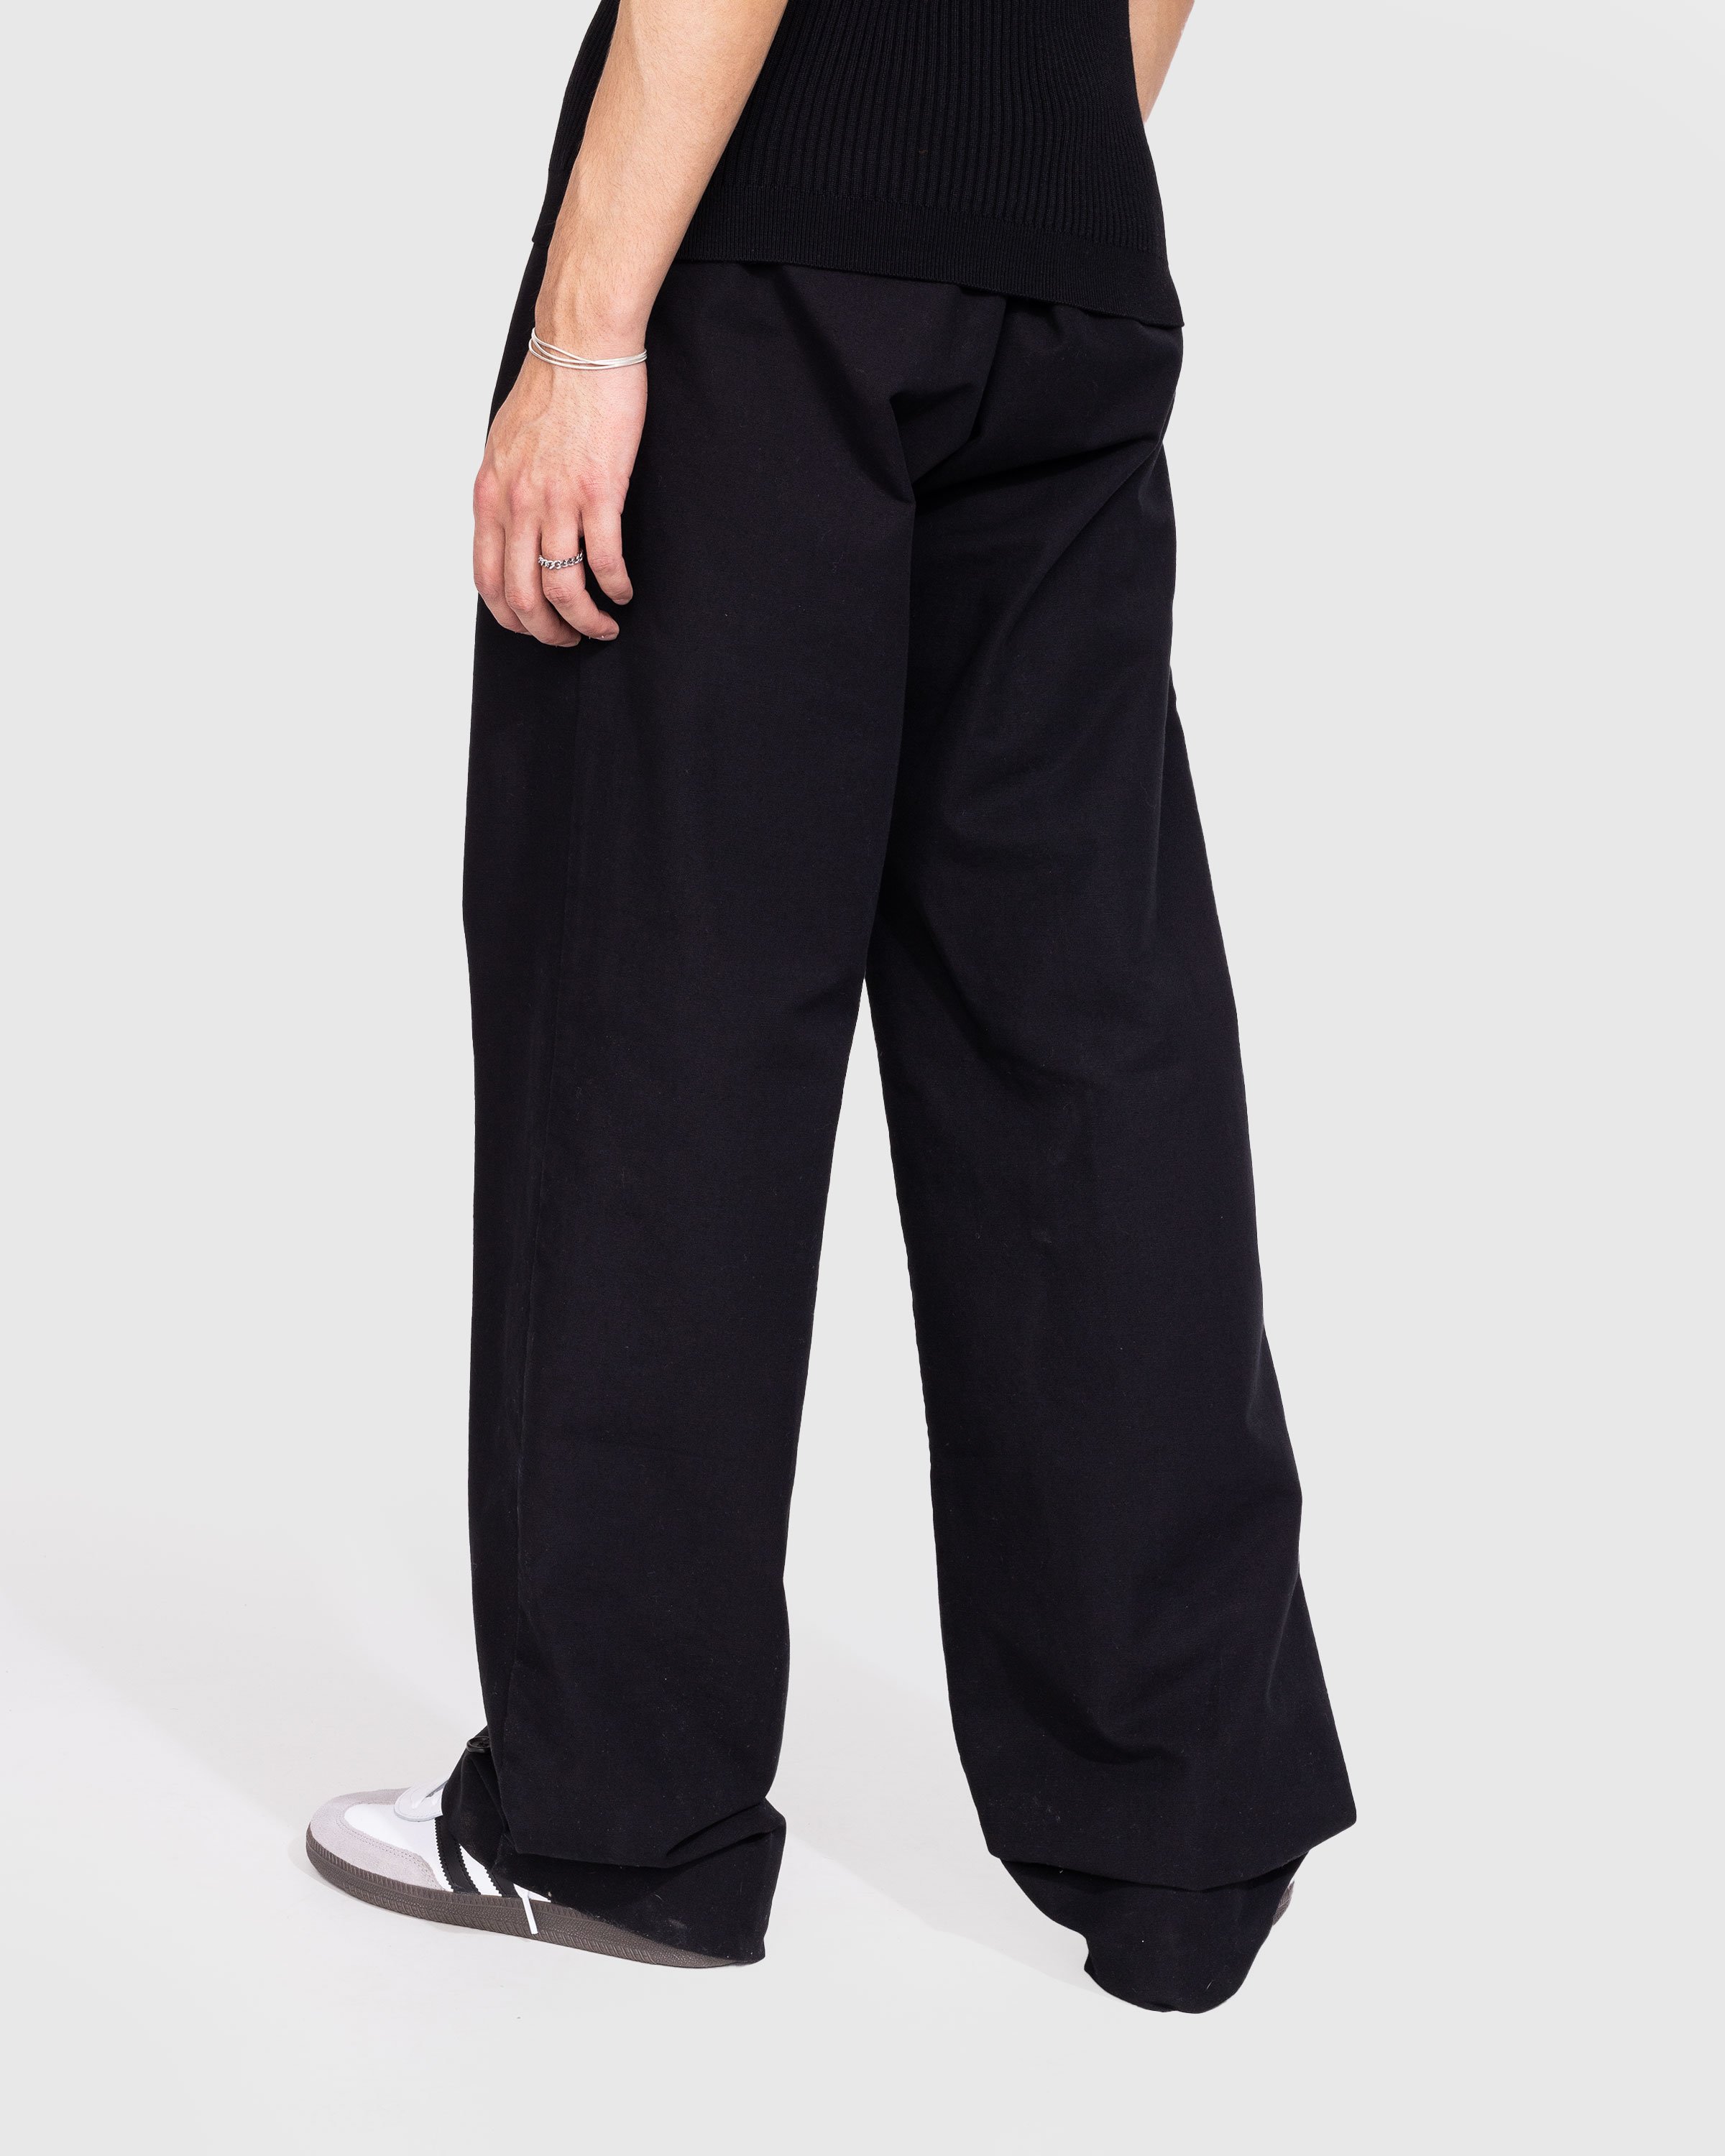 Winnie New York - Bottom Closure Trouser Black - Clothing - Black - Image 3